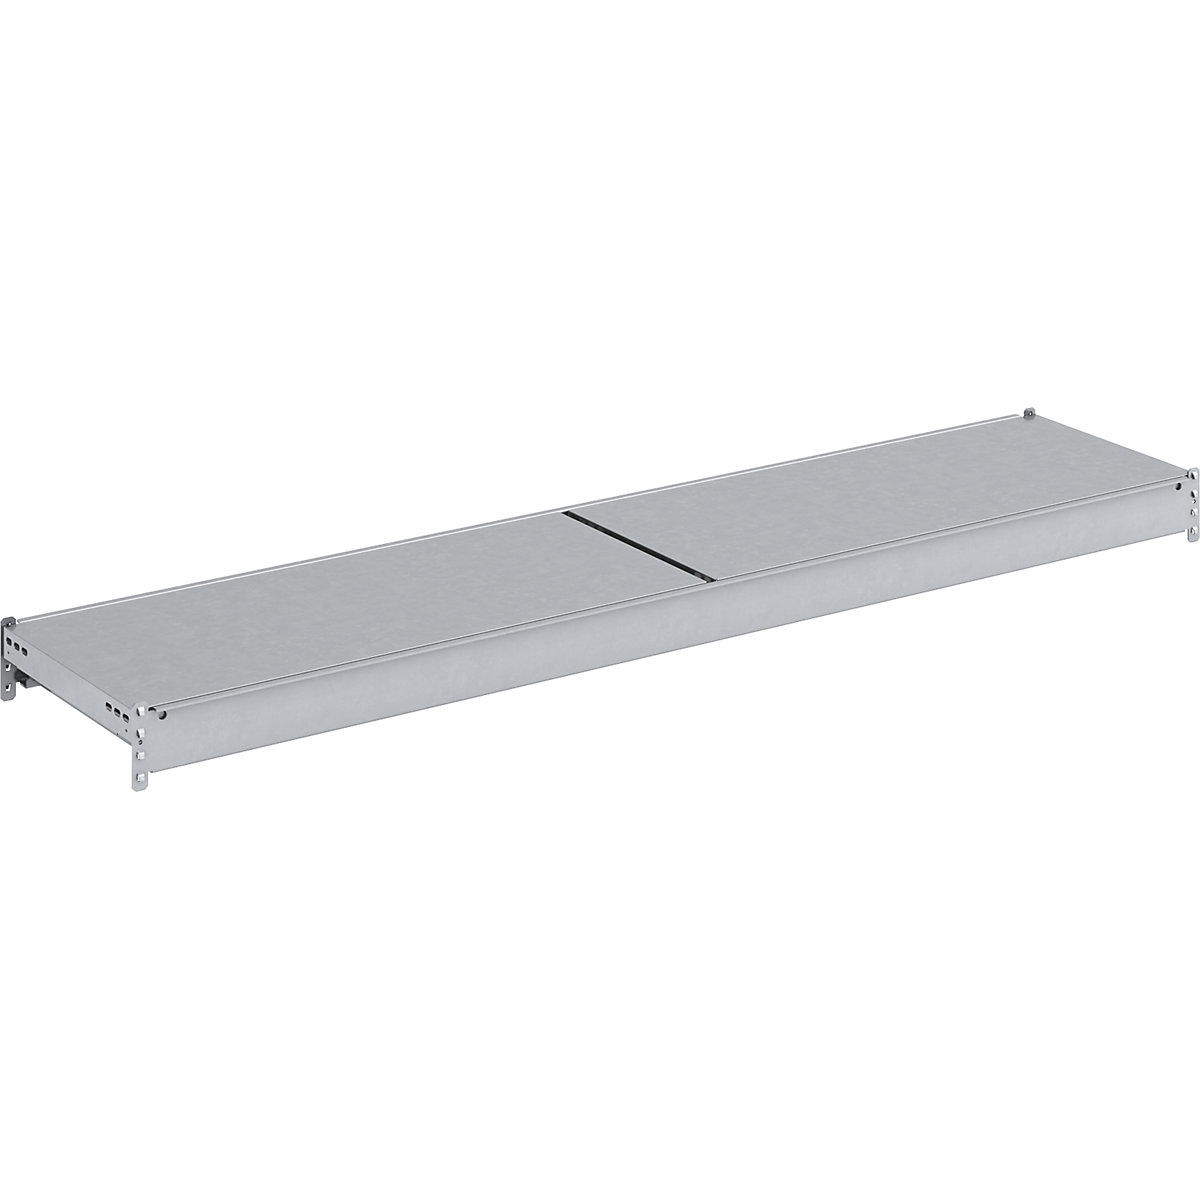 Additional shelf level with steel shelves, zinc plated – hofe